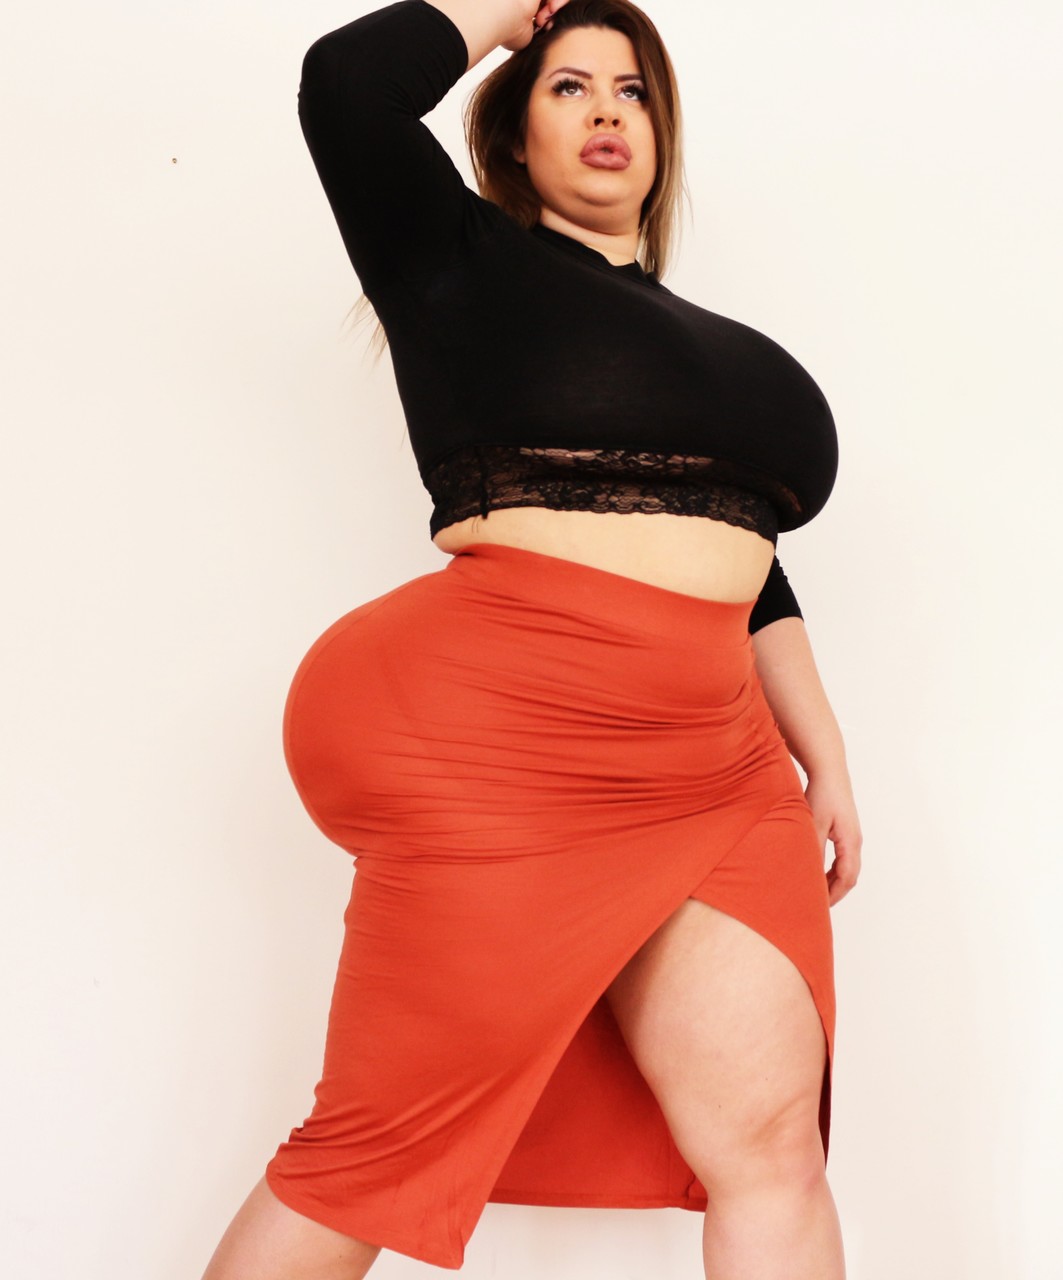 Stunning MILF fatty Natasha Crown flaunting her very big ass in a tight skirt foto porno #423816656